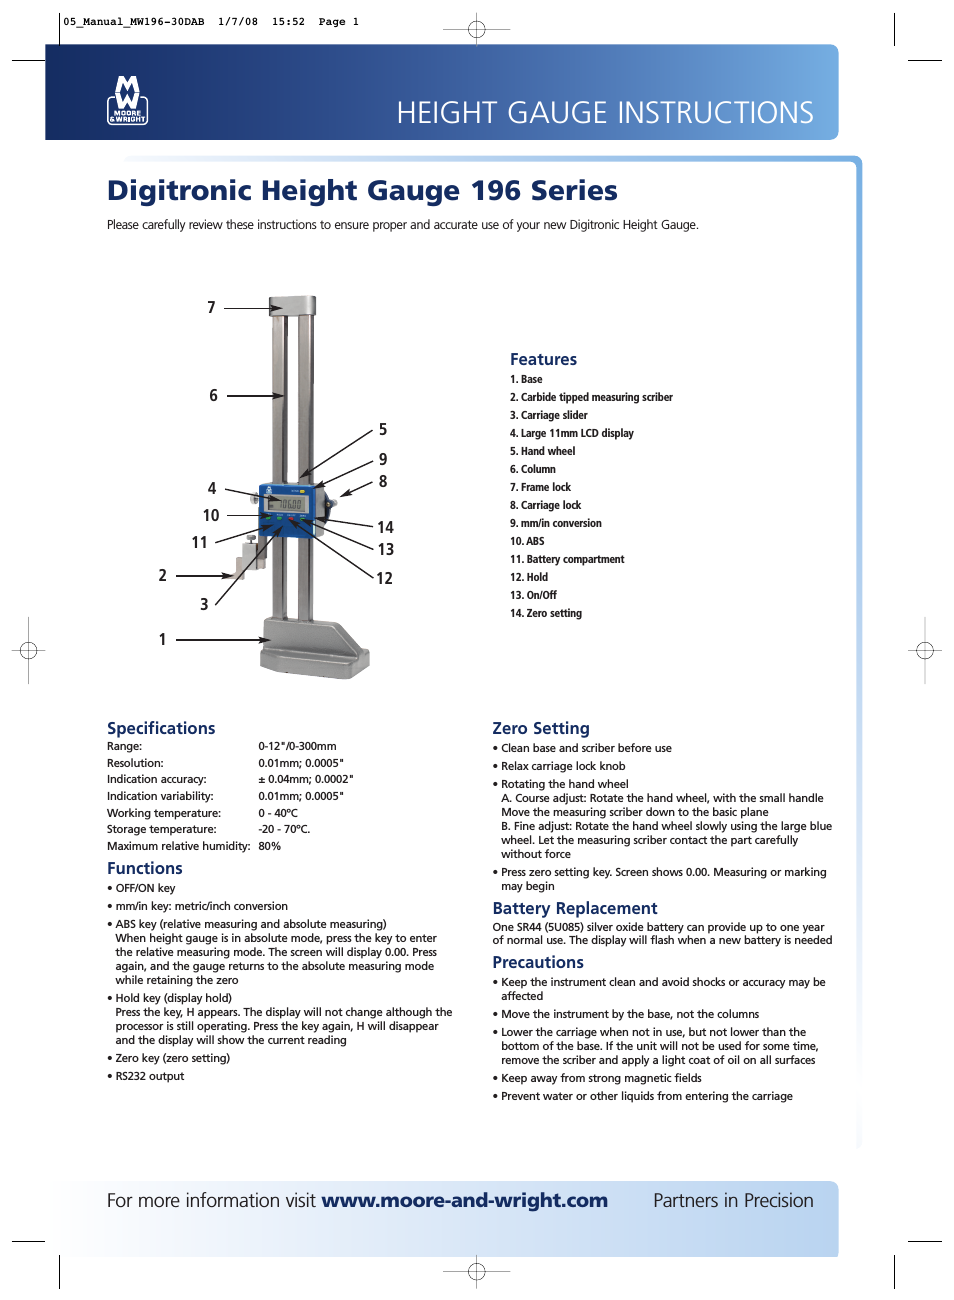 M&W Digitronic Height Gauge 196 Series